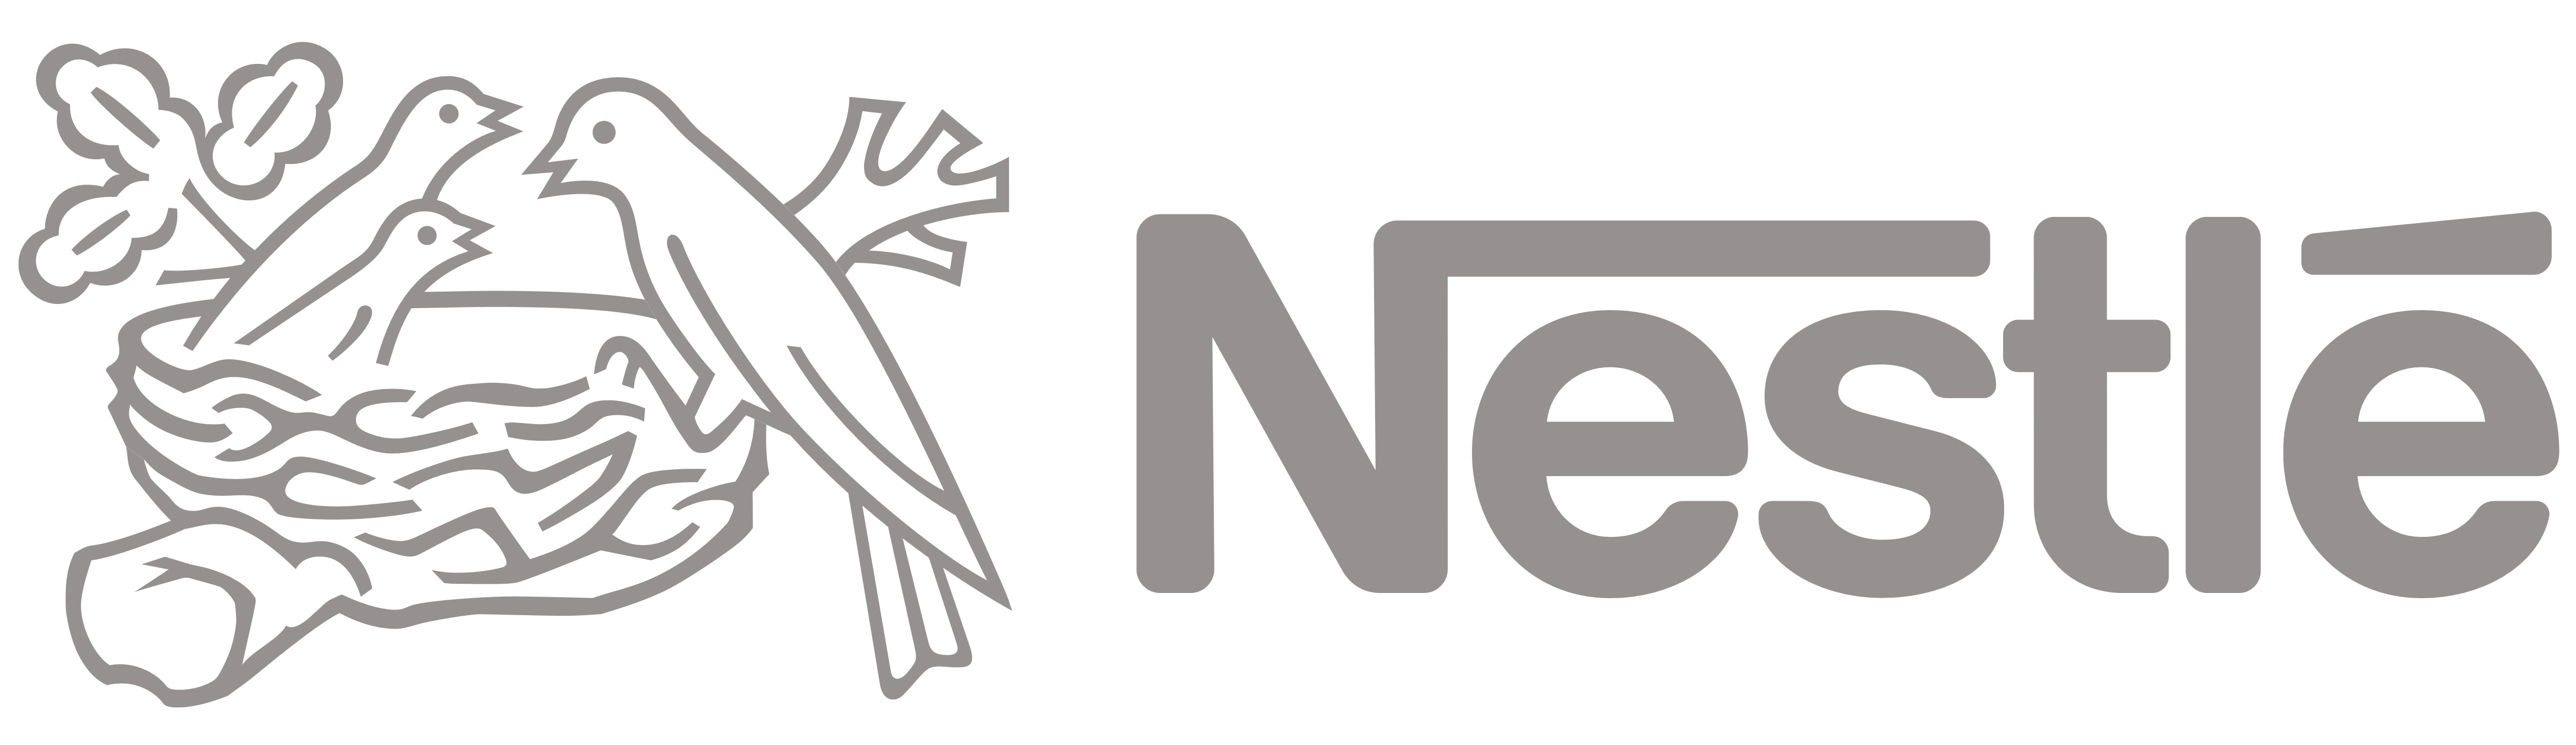 Nestlé_logo_1_gray